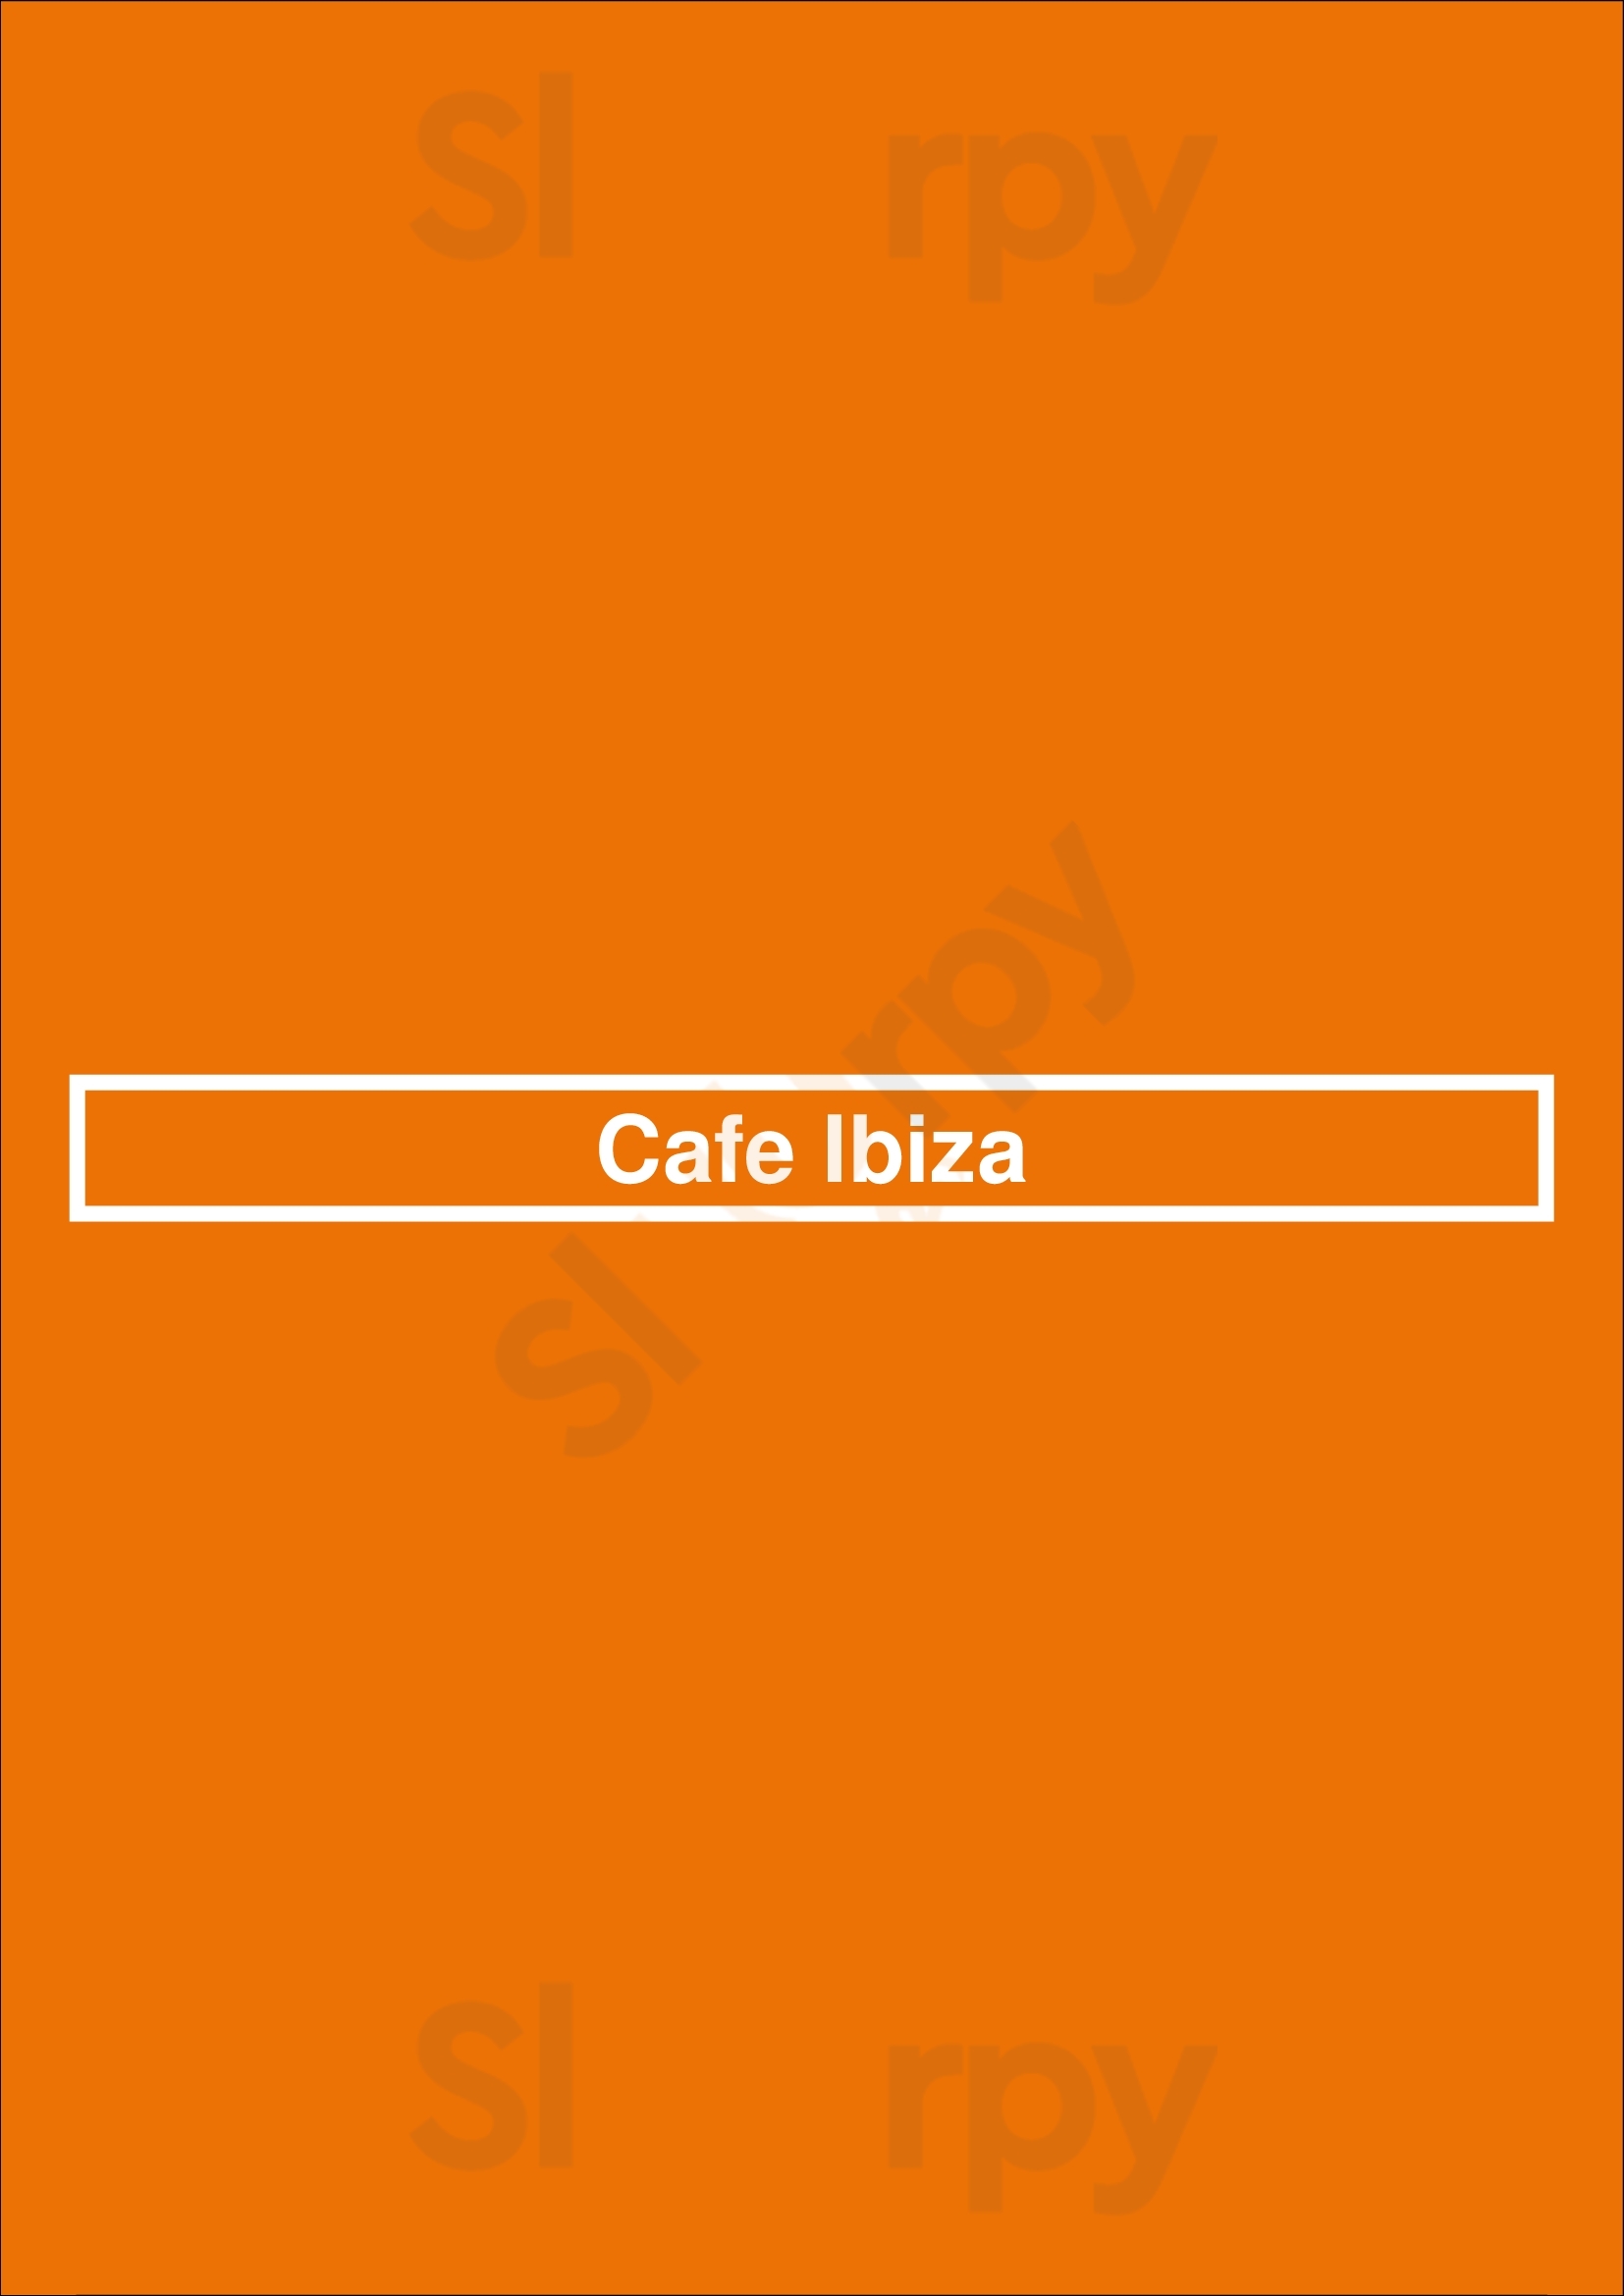 Cafe Ibiza Fort Lauderdale Menu - 1